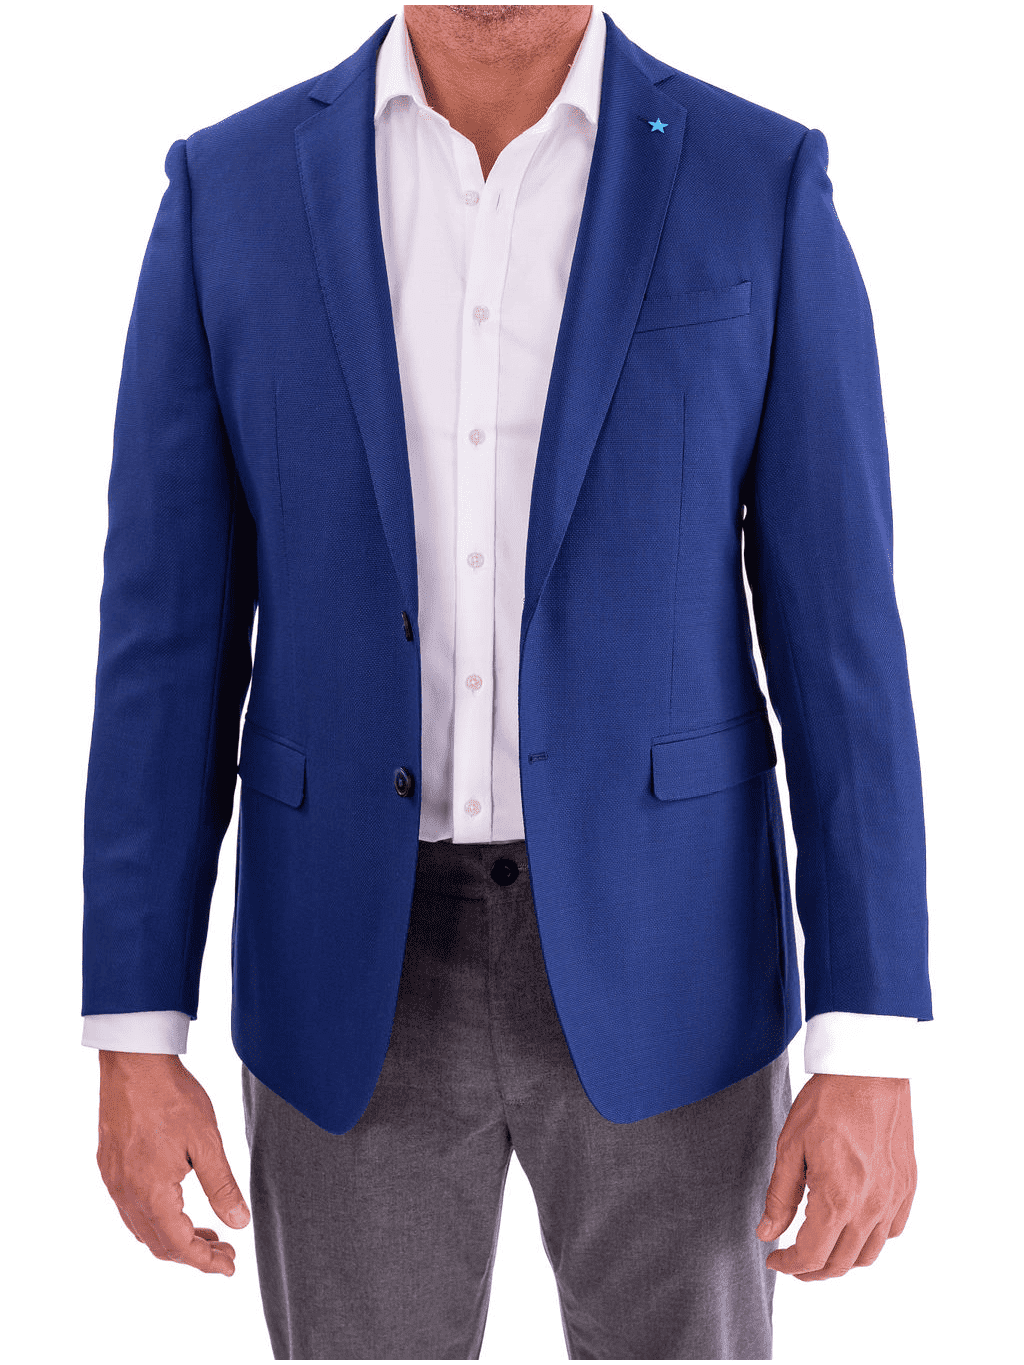 Wholesale men's blazers and women's blazers, blazer jackets and career  apparel.